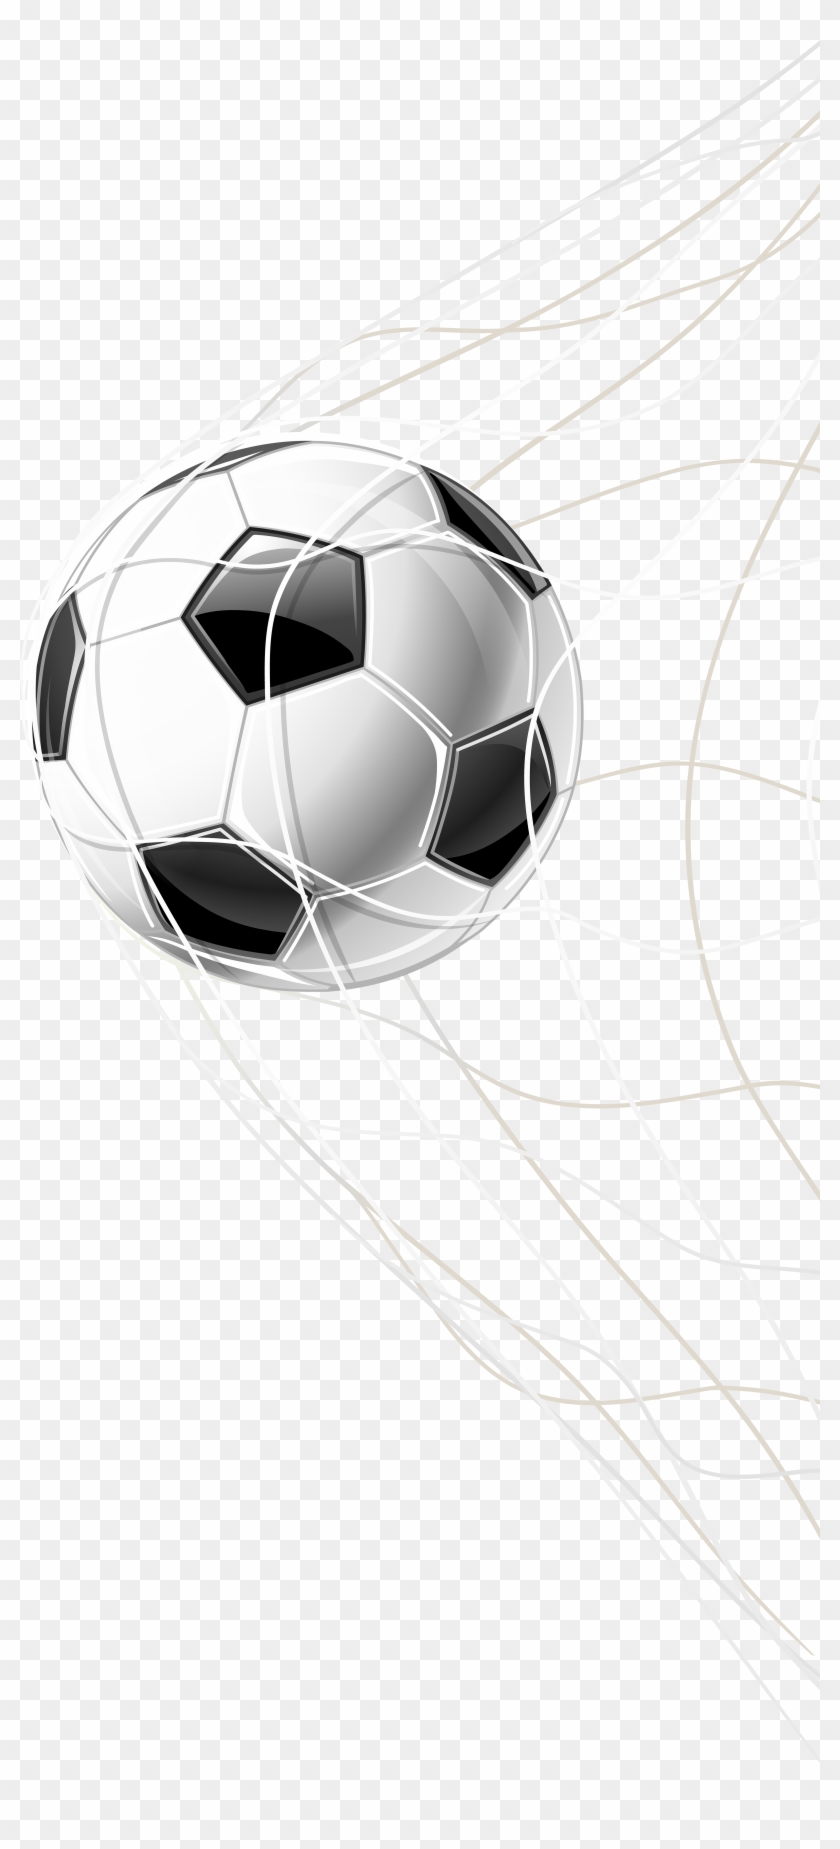 Soccer Goal In A Net Png Clip Art Image - Soccer Goal Png Transparent Png #227875